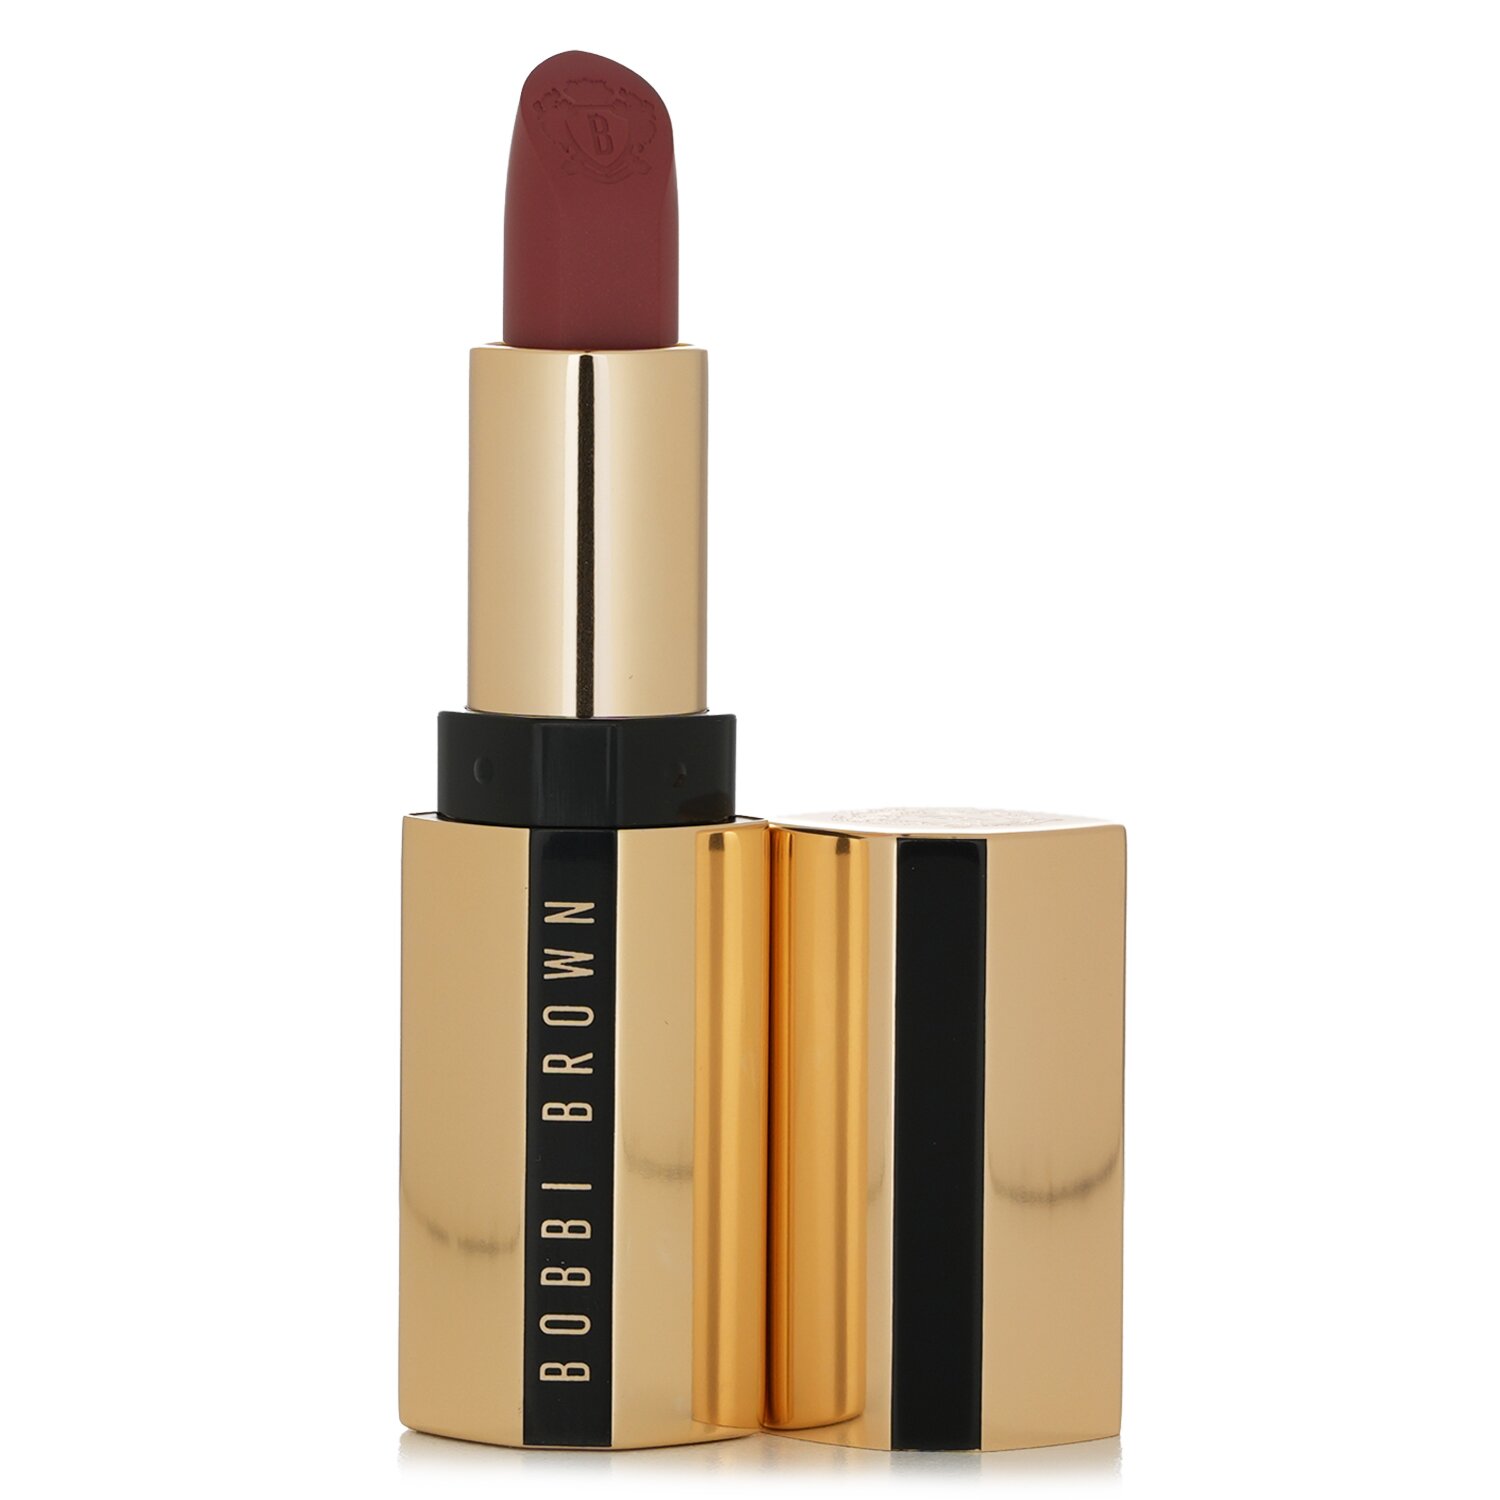 Chanel Rouge Coco Flash Hydrating Vibrant Shine Lip Colour - # 66 Pulse 3g/ 0.1oz